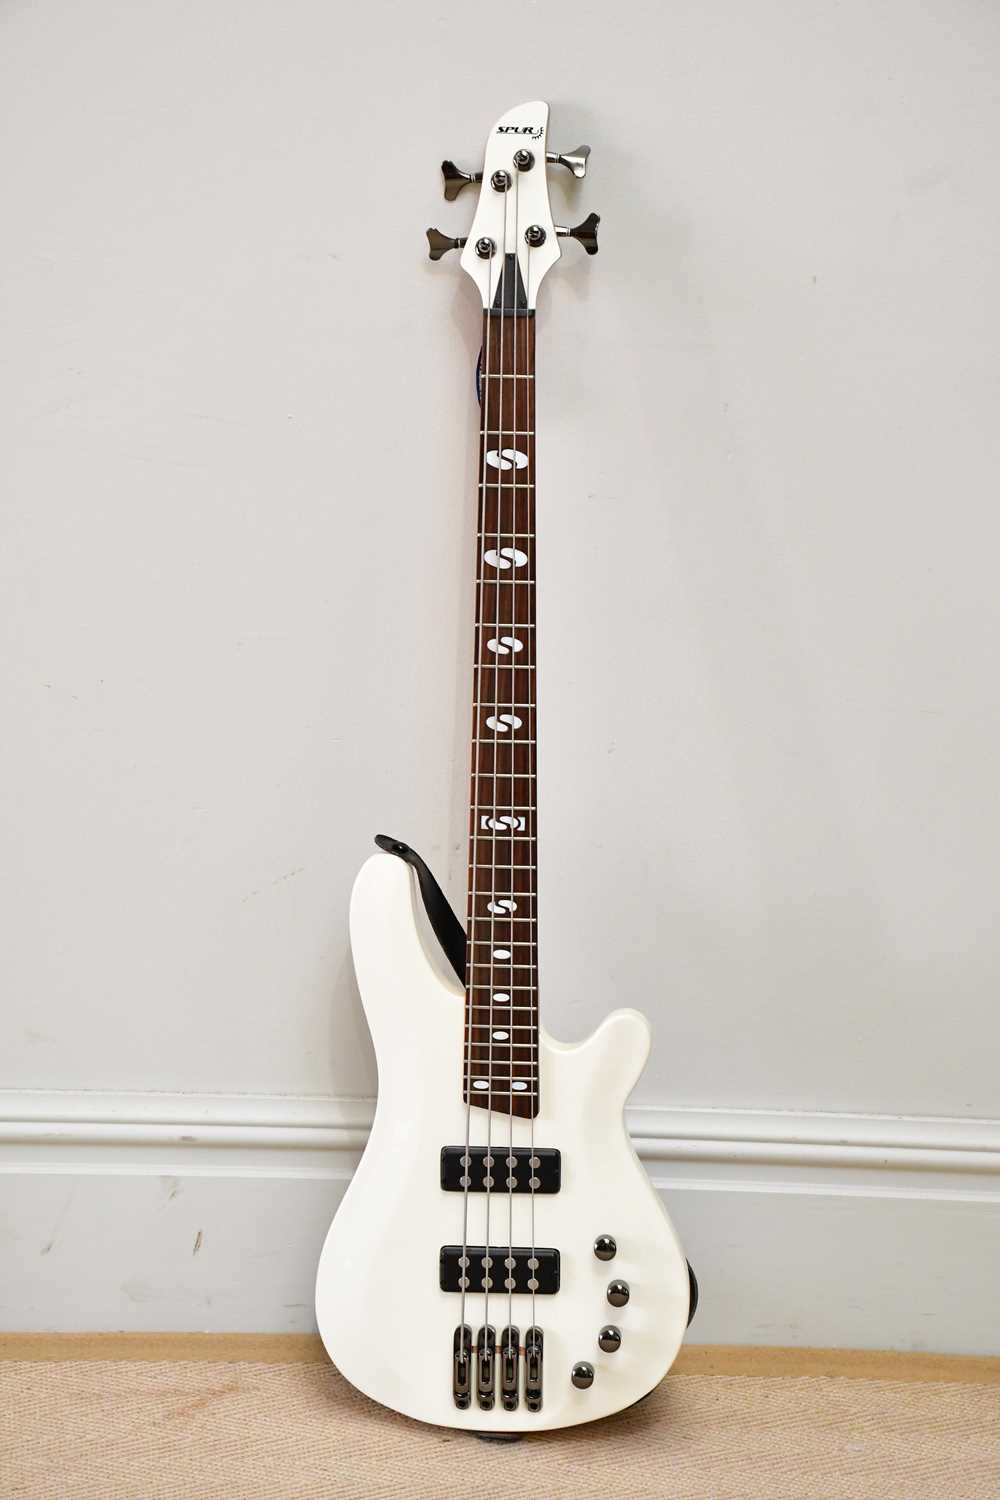 SPUR; a B-450 four string electric bass guitar.